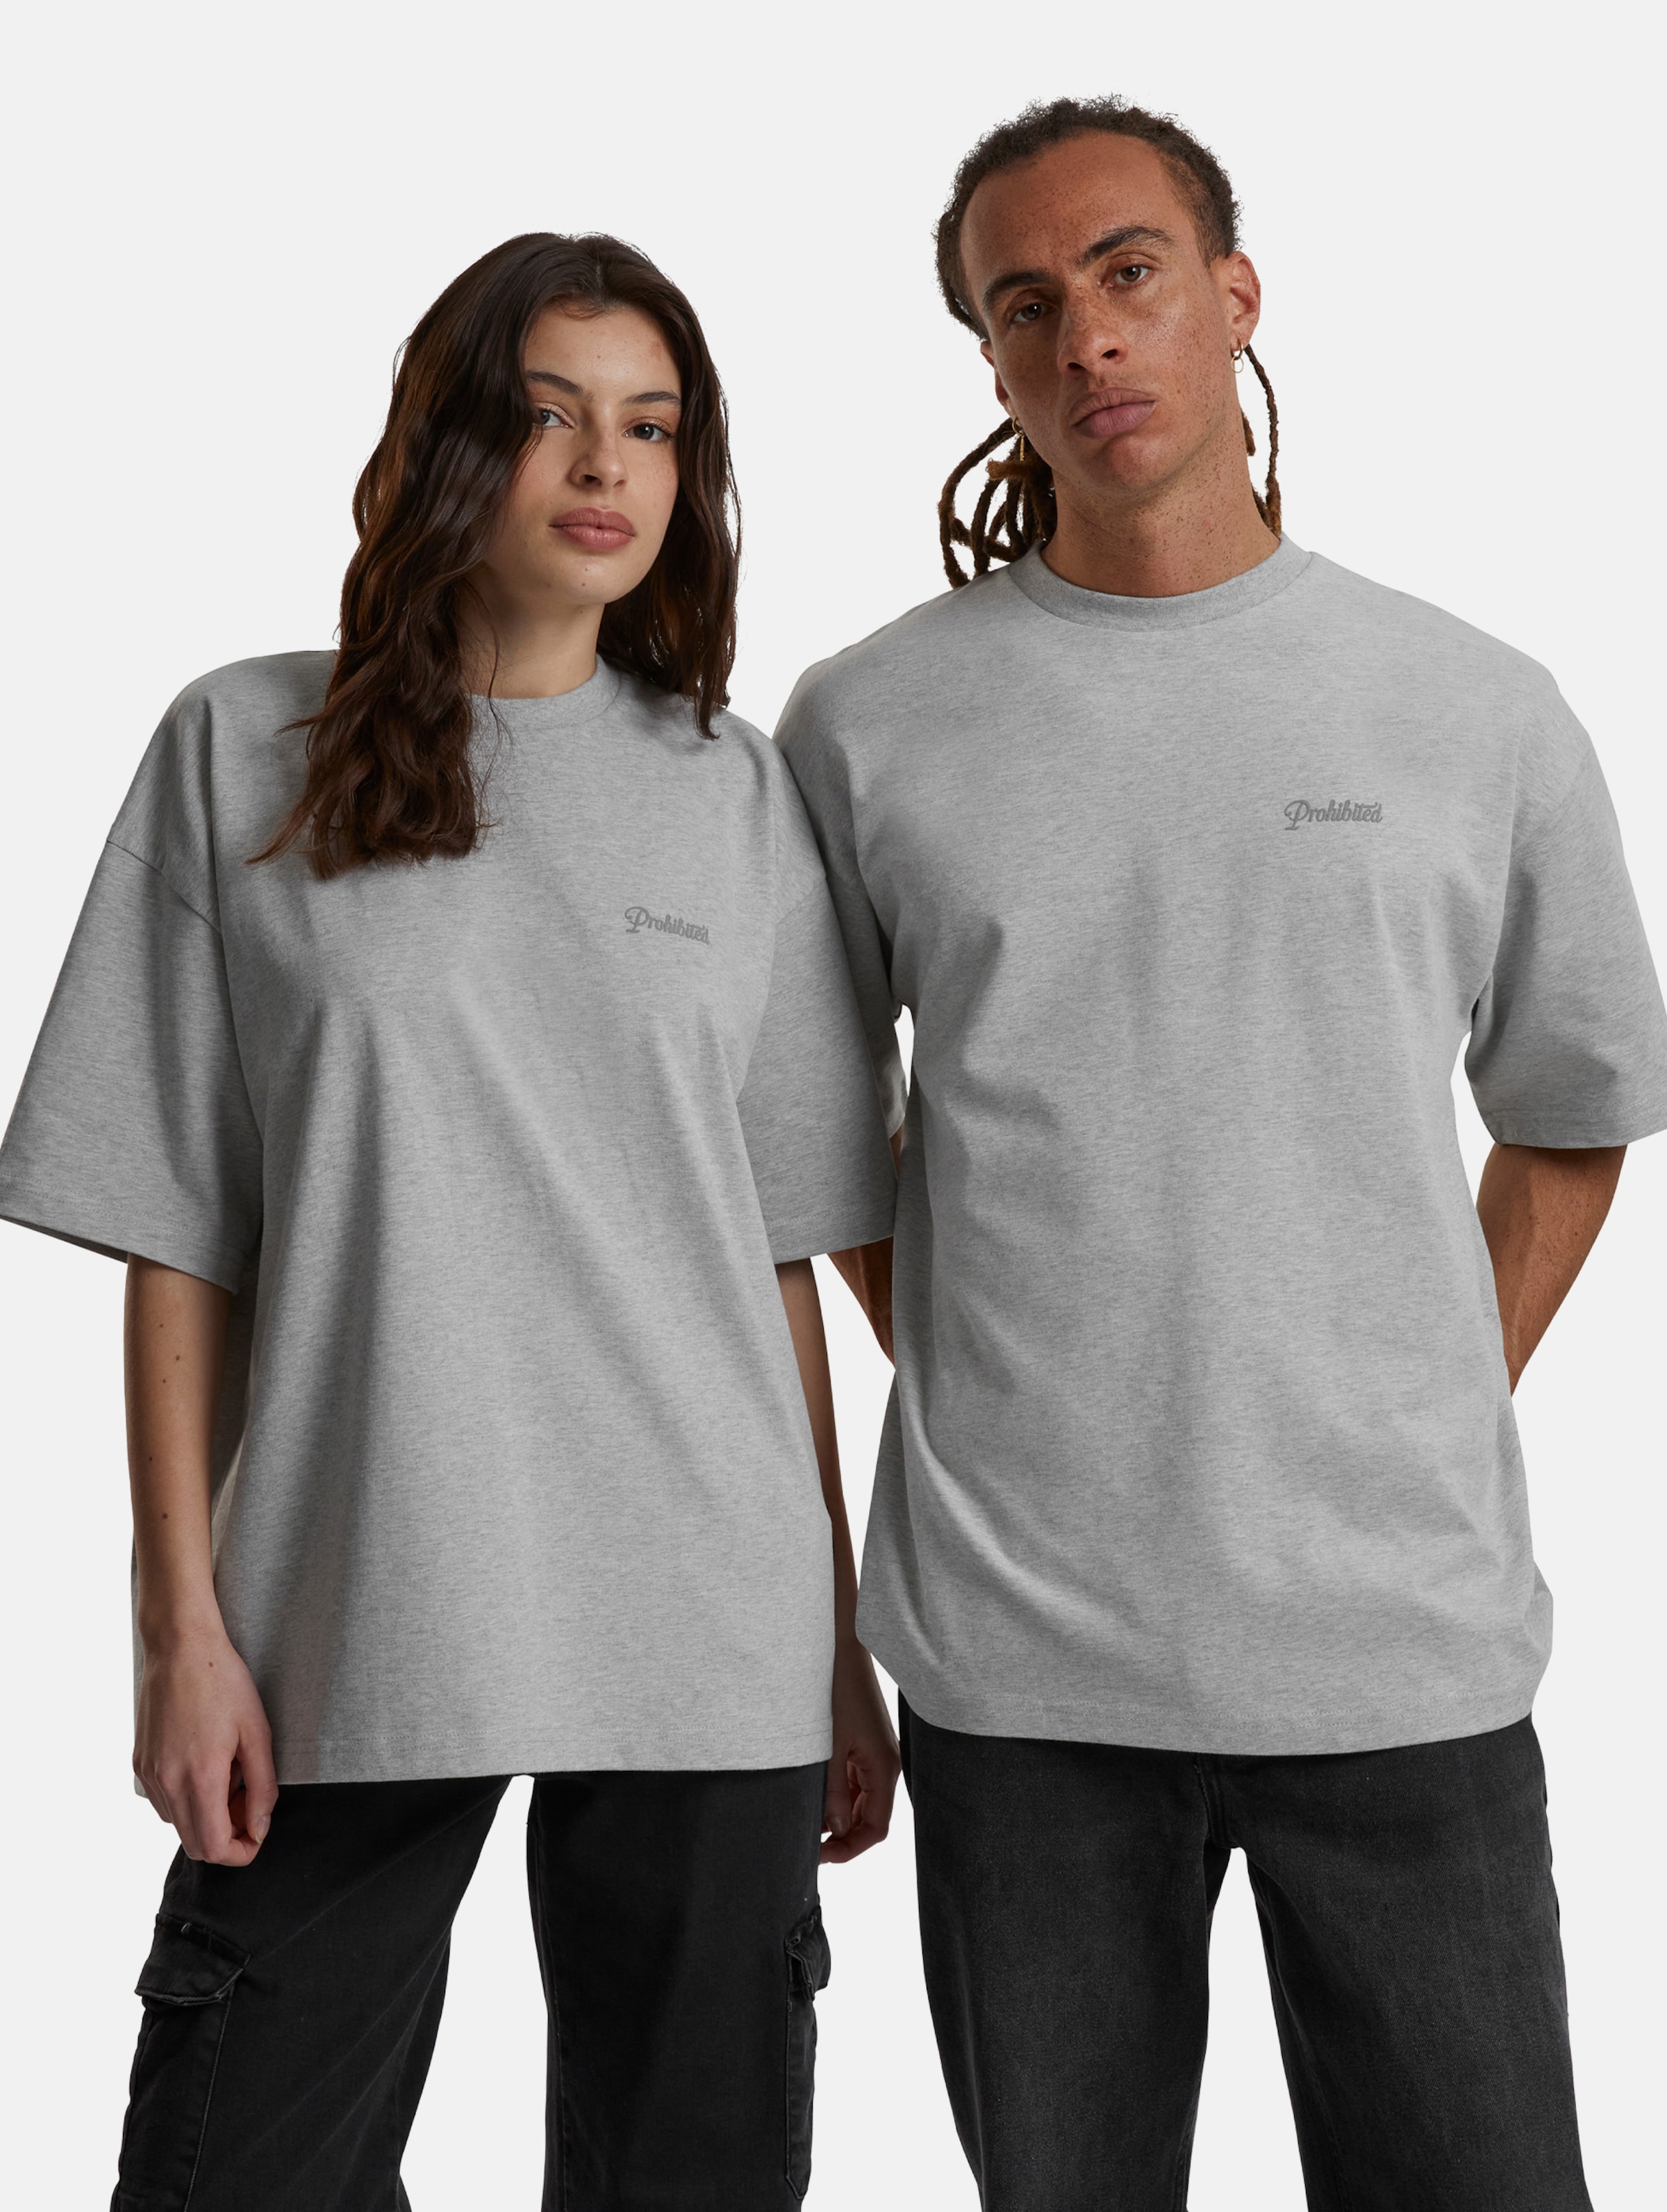 Prohibited 10119 V2 T-Shirts Frauen,Männer,Unisex op kleur grijs, Maat S